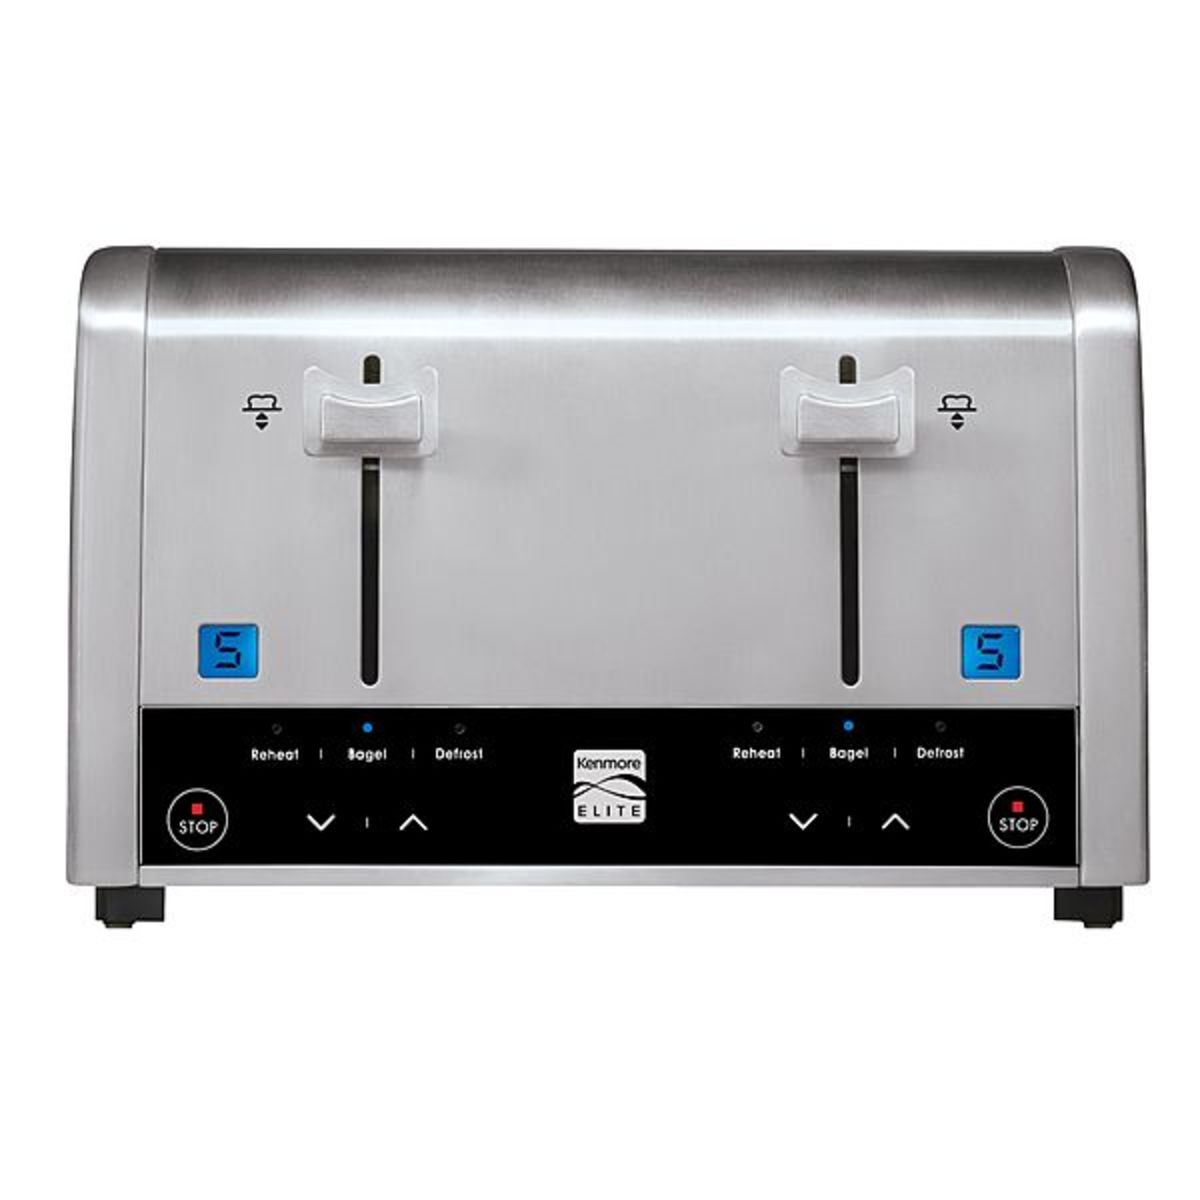 Kenmore Elite Digital 4-Slice toaster, Model # 135308